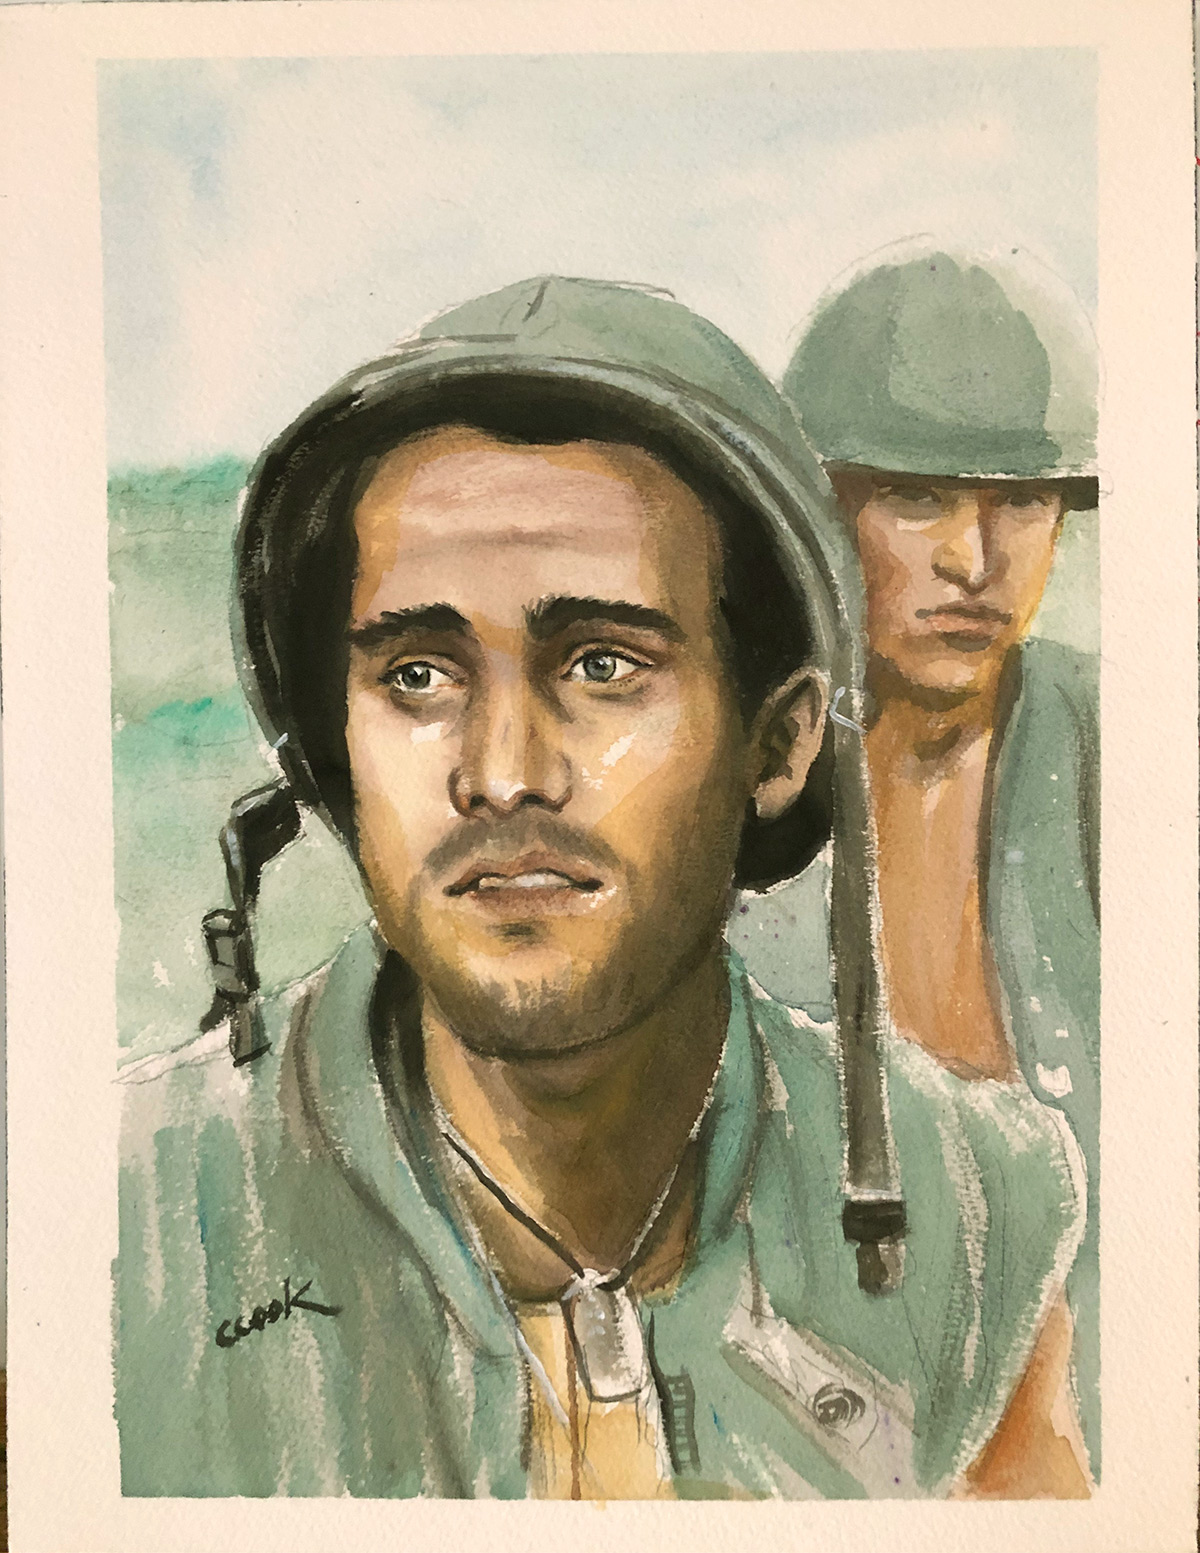 Vietnam War Paintings